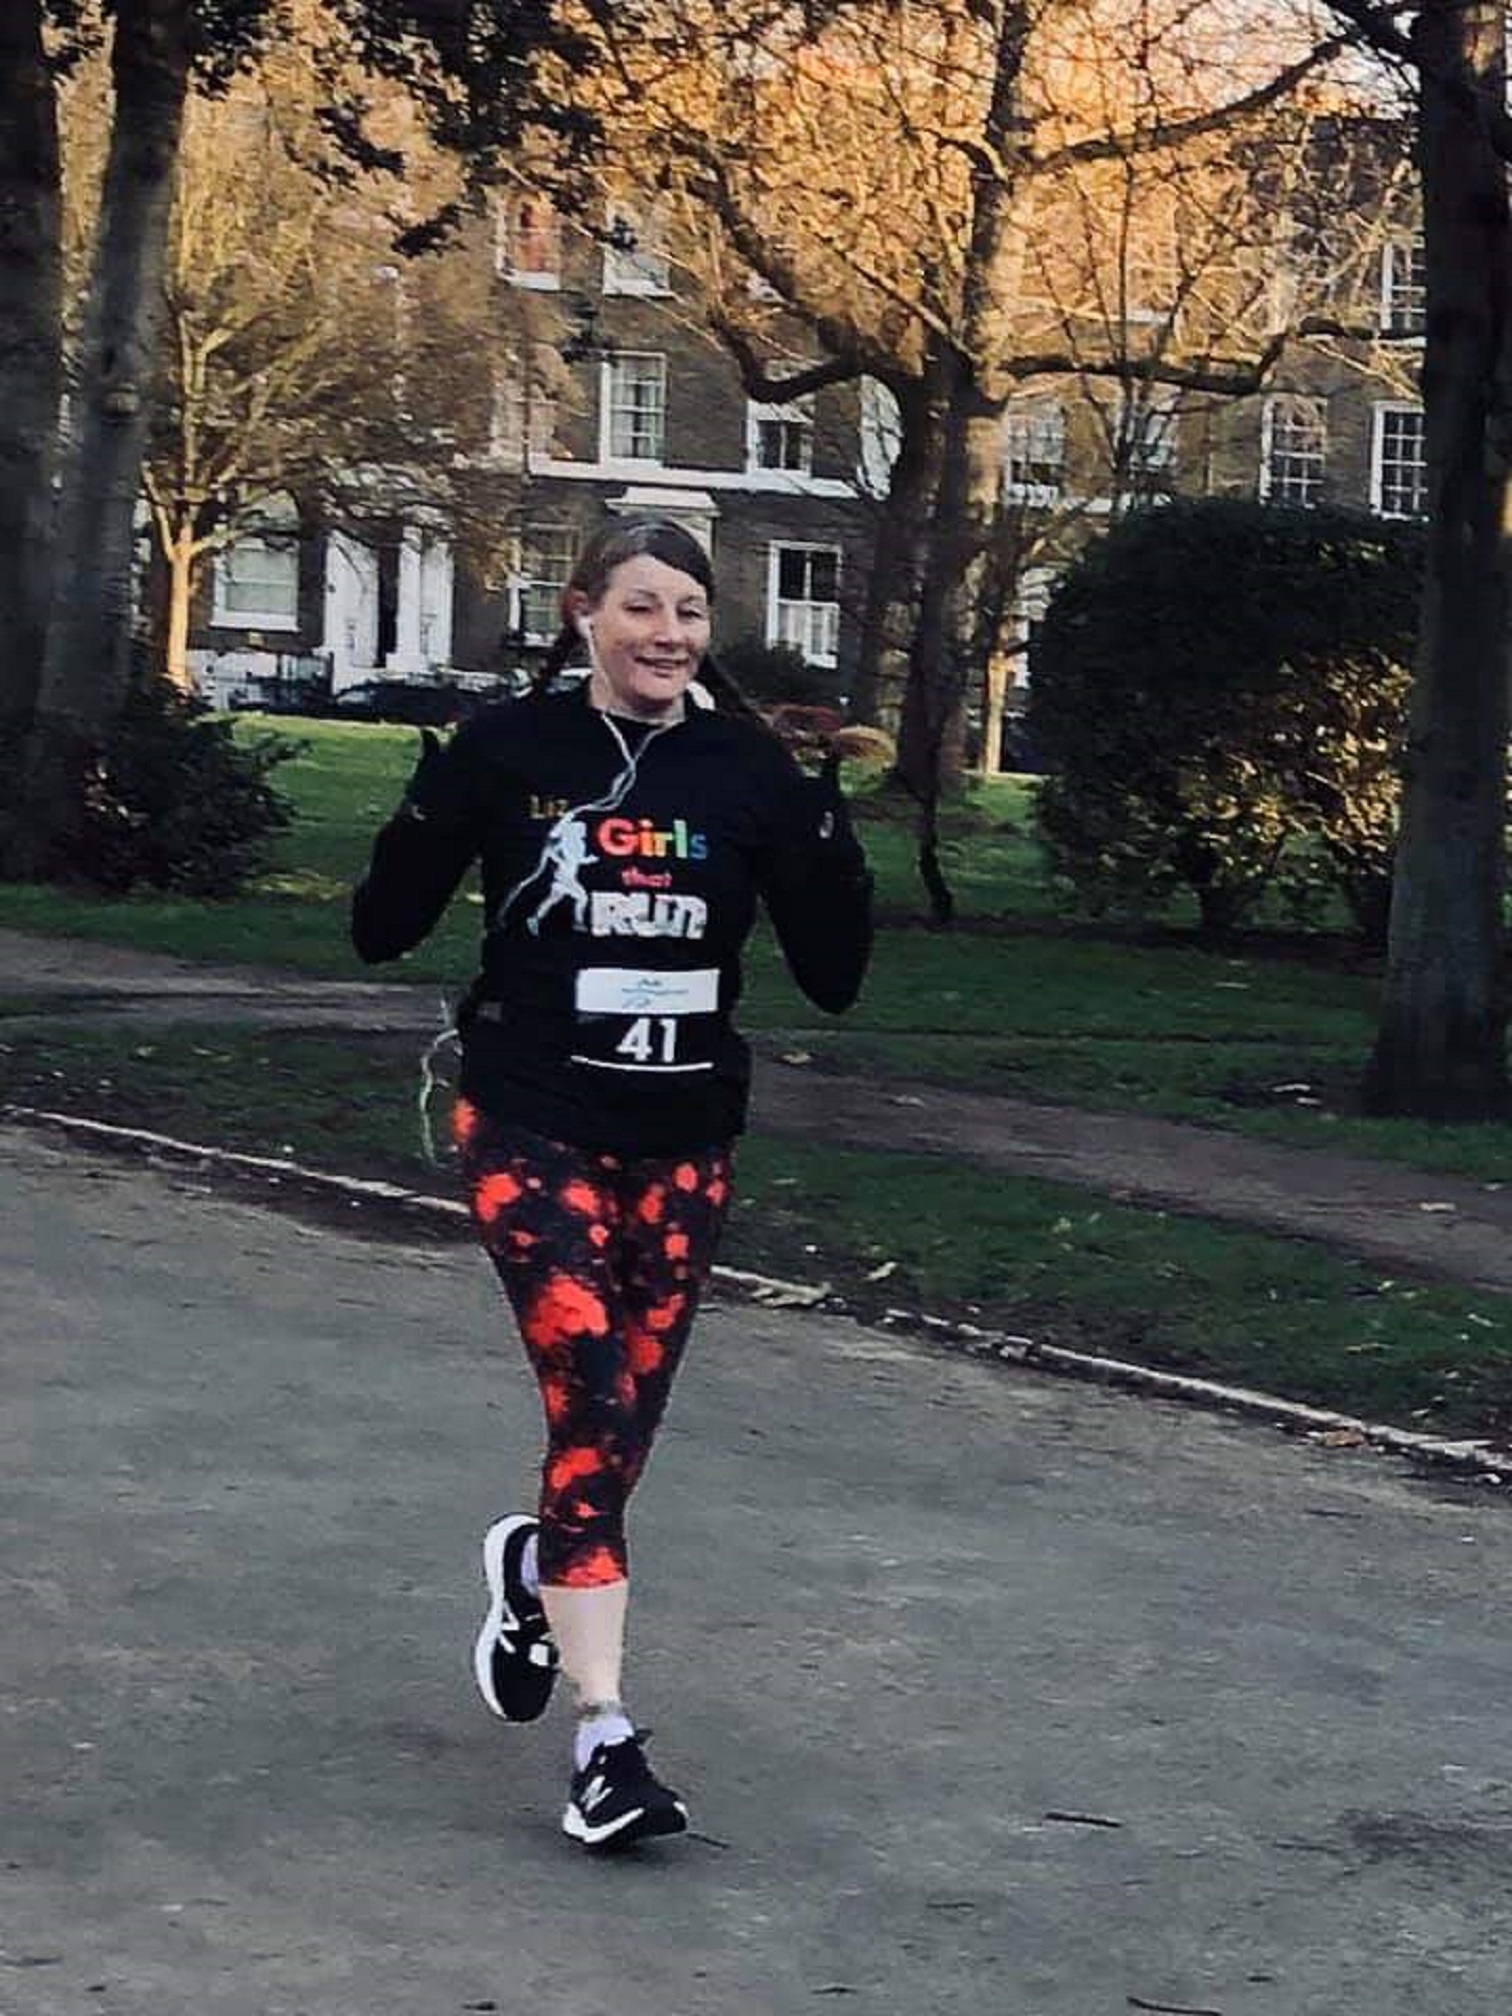 Liz Ayres, who ran as a pacer during the 2019 London Marathon